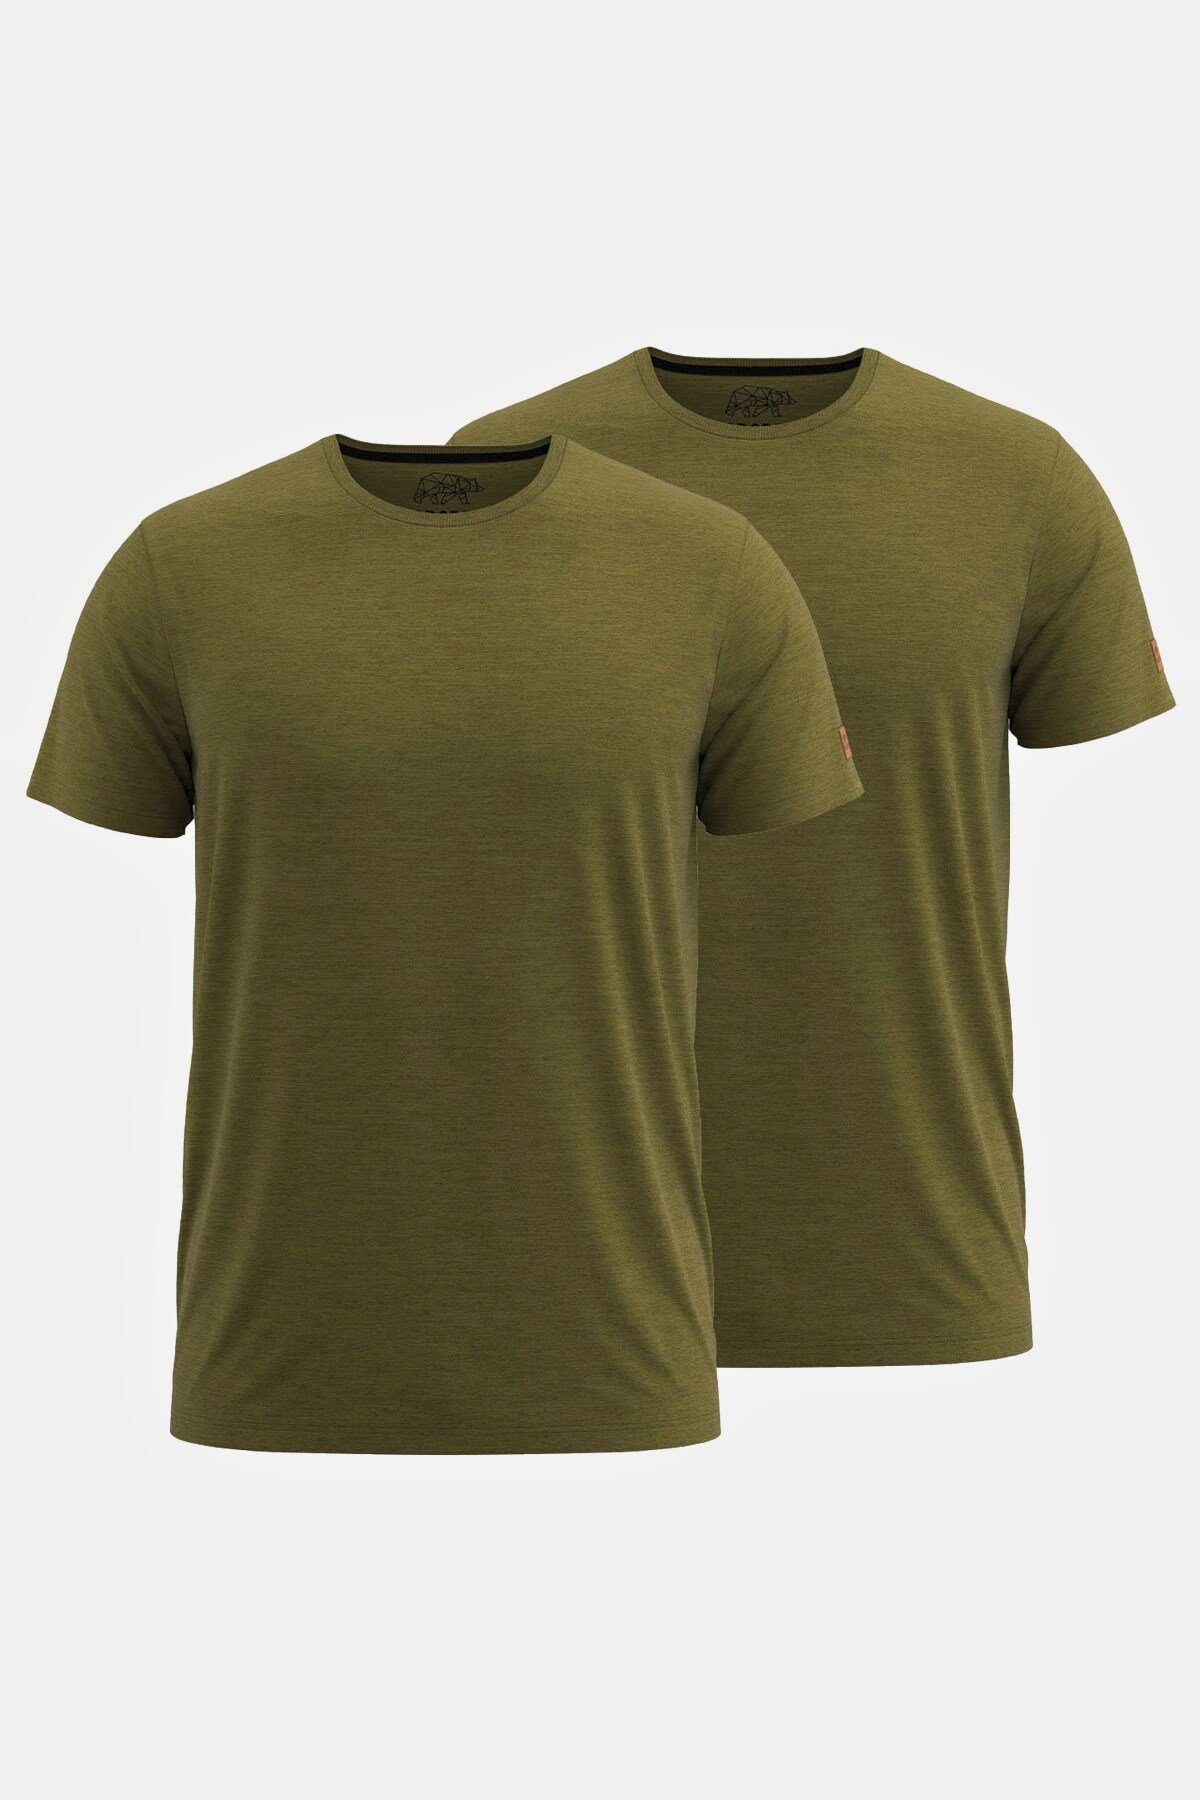 FORSBERG T-Shirt T-Shirt 1/2 Doppelpack khaki